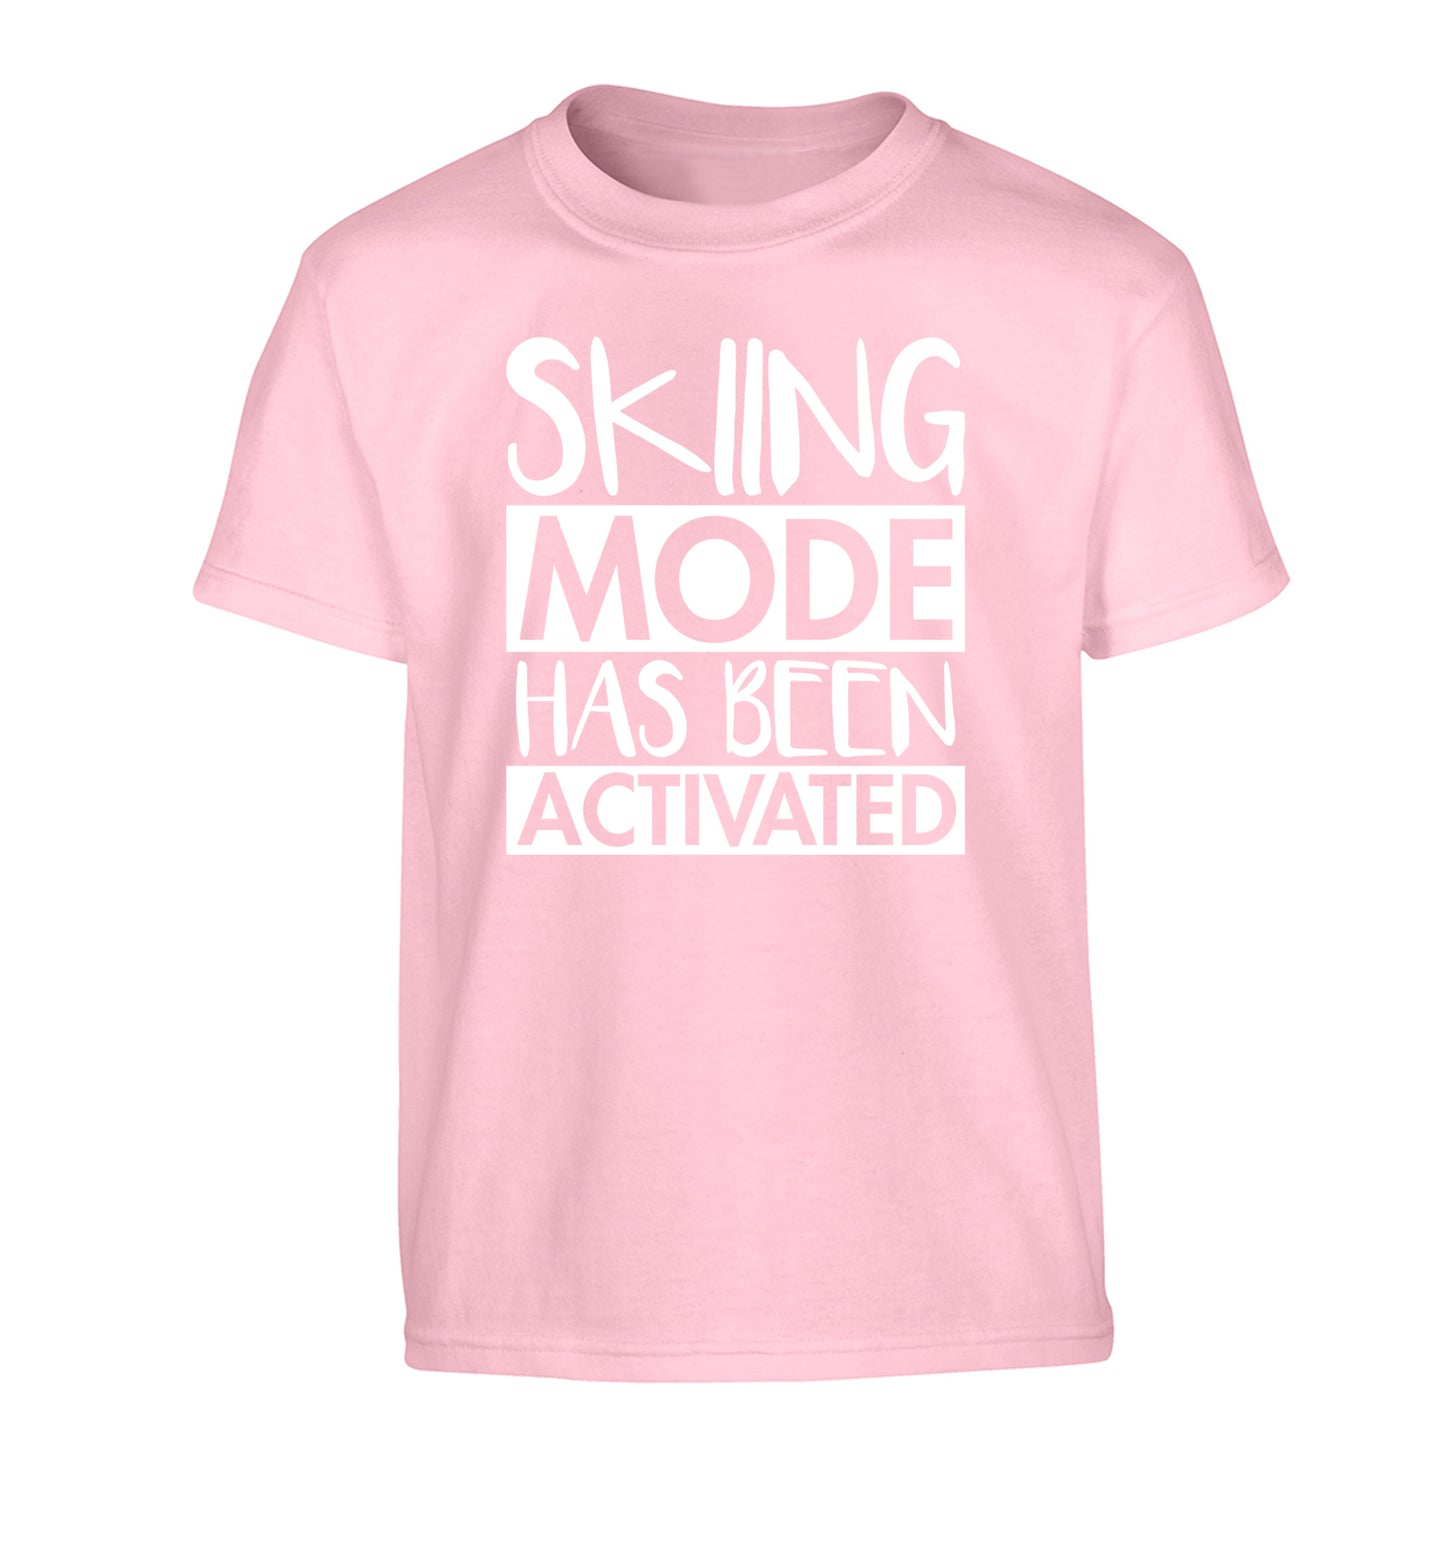 Skiing mode activated Children's light pink Tshirt 12-14 Years